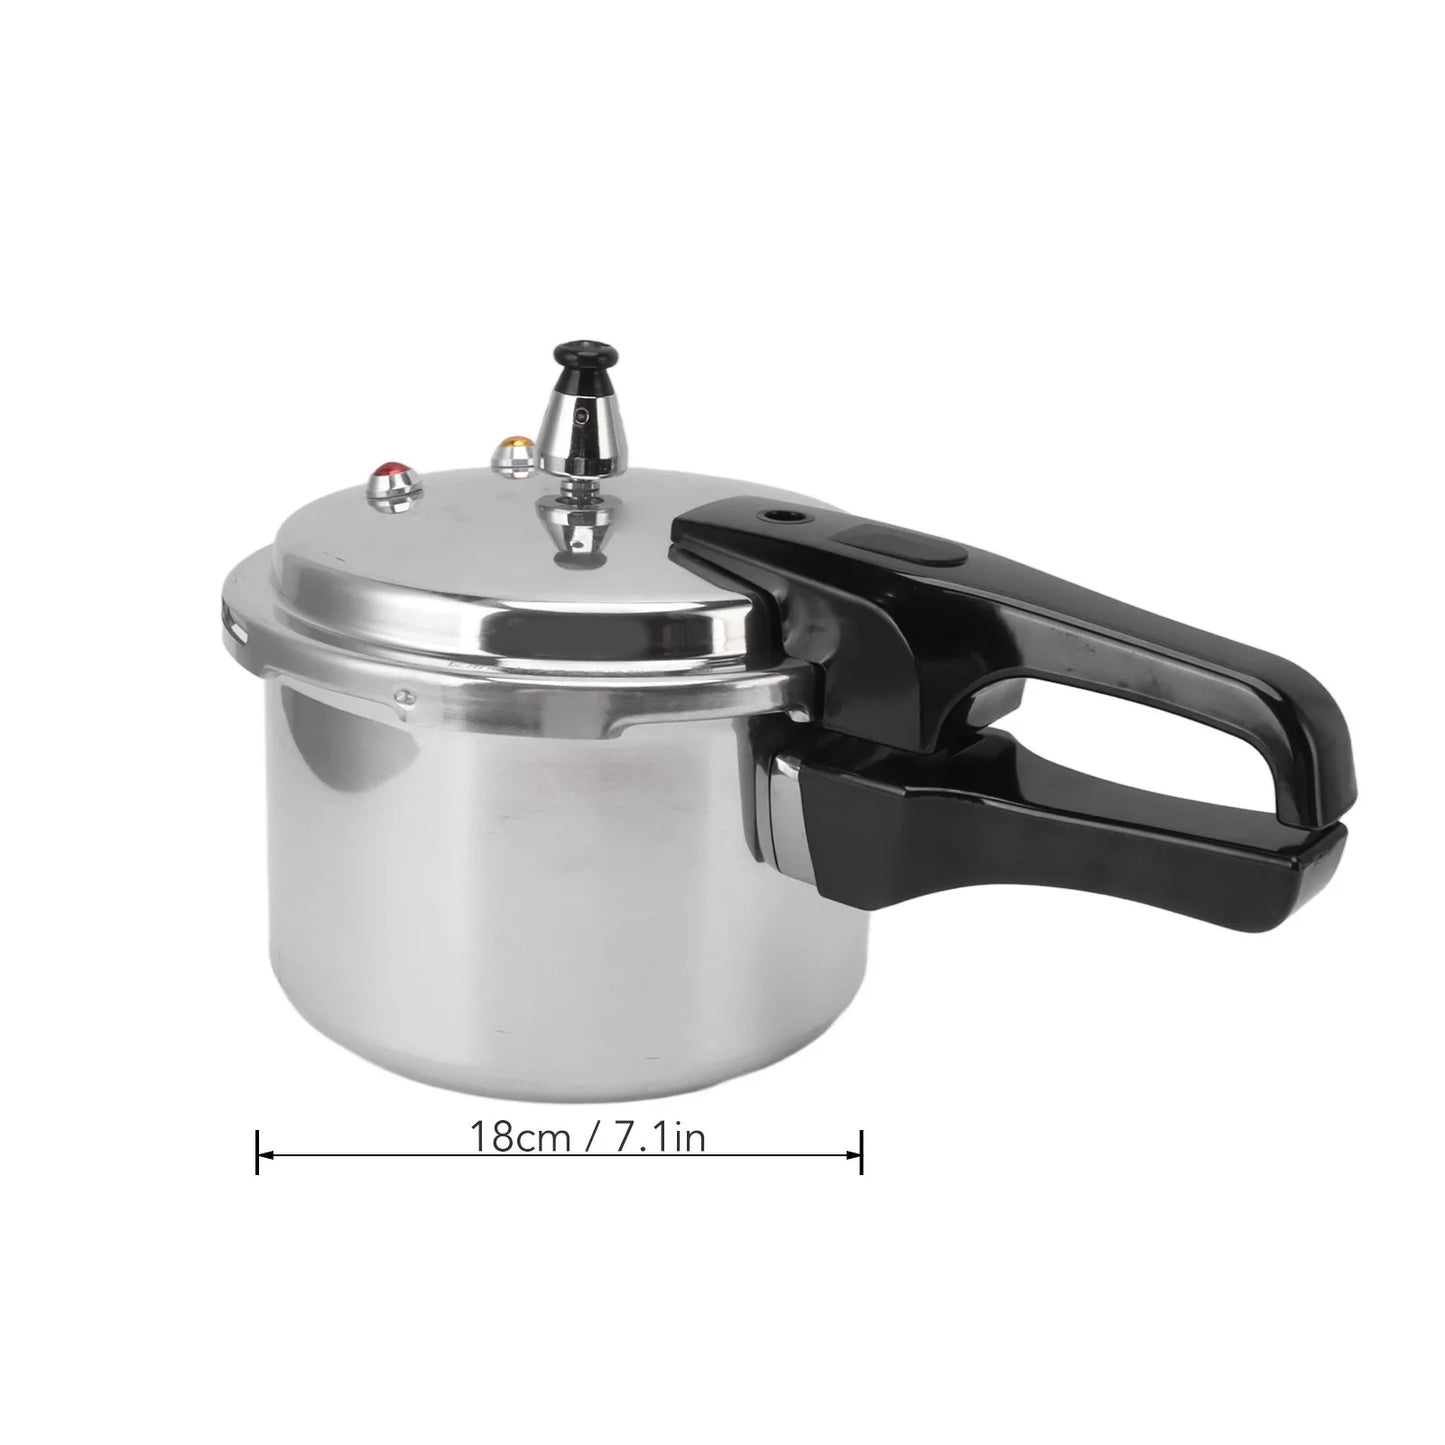 3L Pressure Cooker
Aluminium Alloy 18cm Bottom
3L Mini Pressure Cooker
Gas Stove